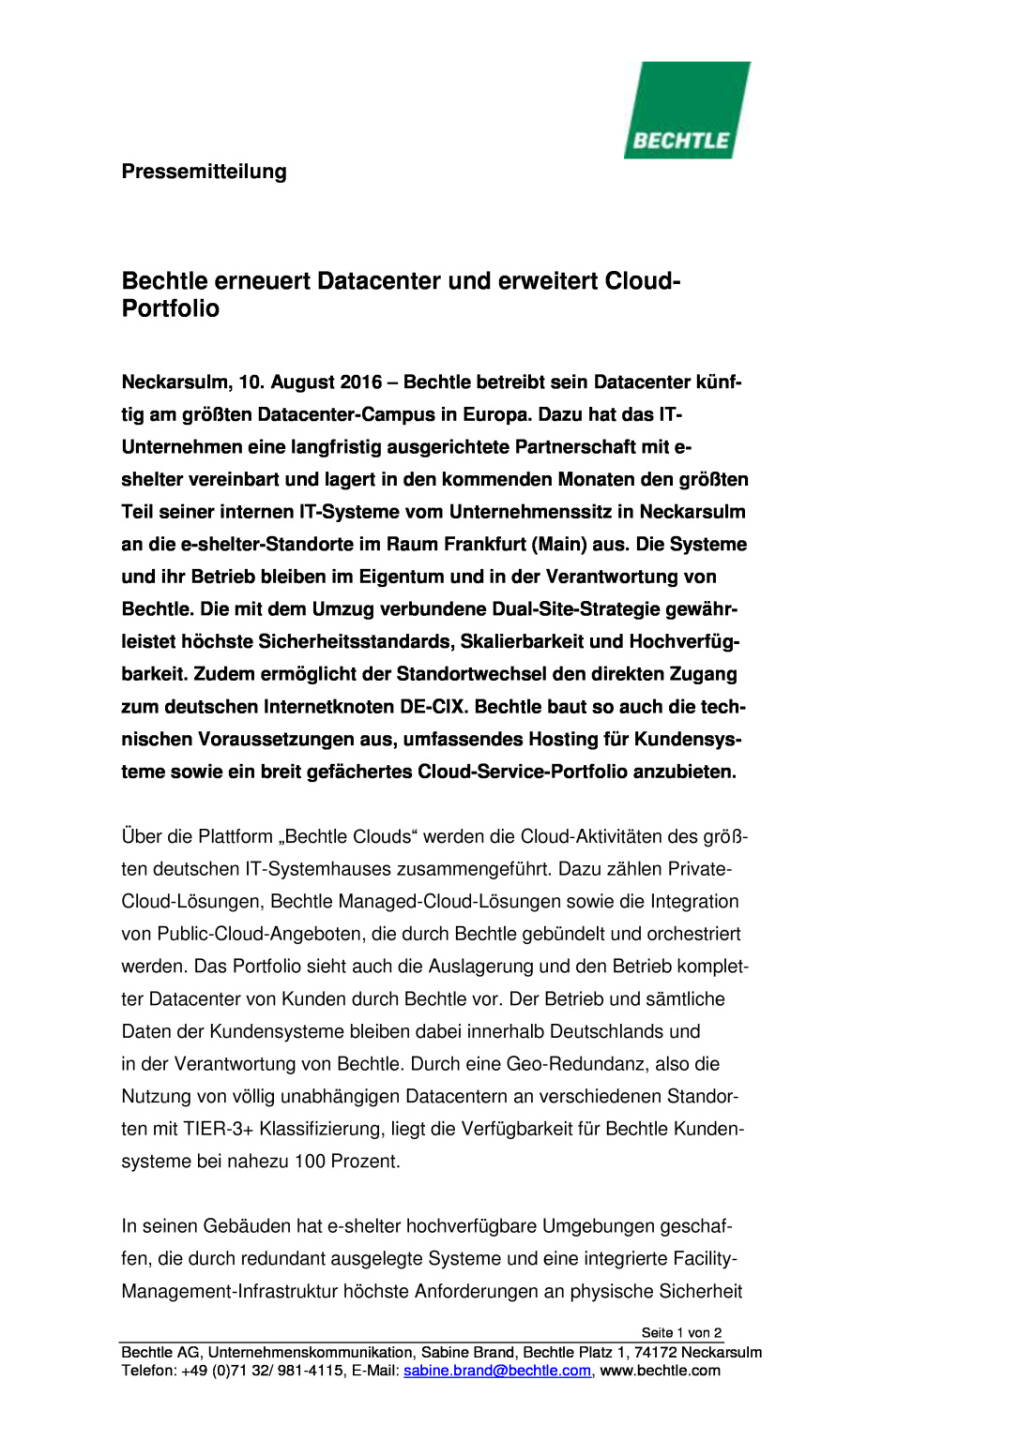 Bechtle erneuert Datacenter und erweitert Cloud-Portfolio, Seite 1/2, komplettes Dokument unter http://boerse-social.com/static/uploads/file_1601_bechtle_erneuert_datacenter_und_erweitert_cloud-portfolio.pdf